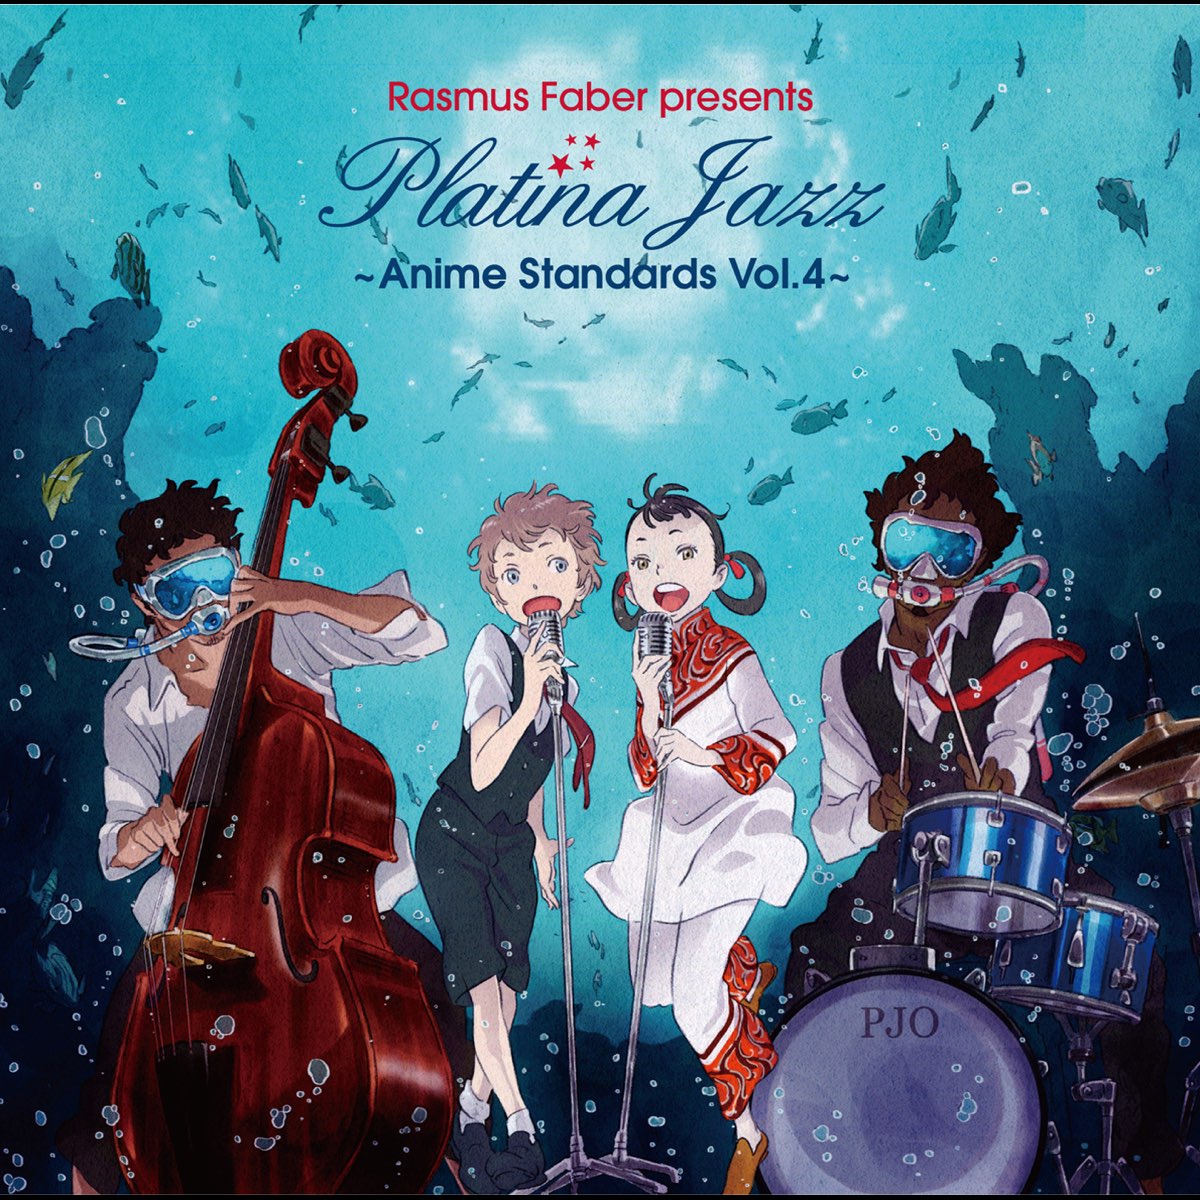 Anime Standards, Vol. 4 by Platina Jazz on iTunes